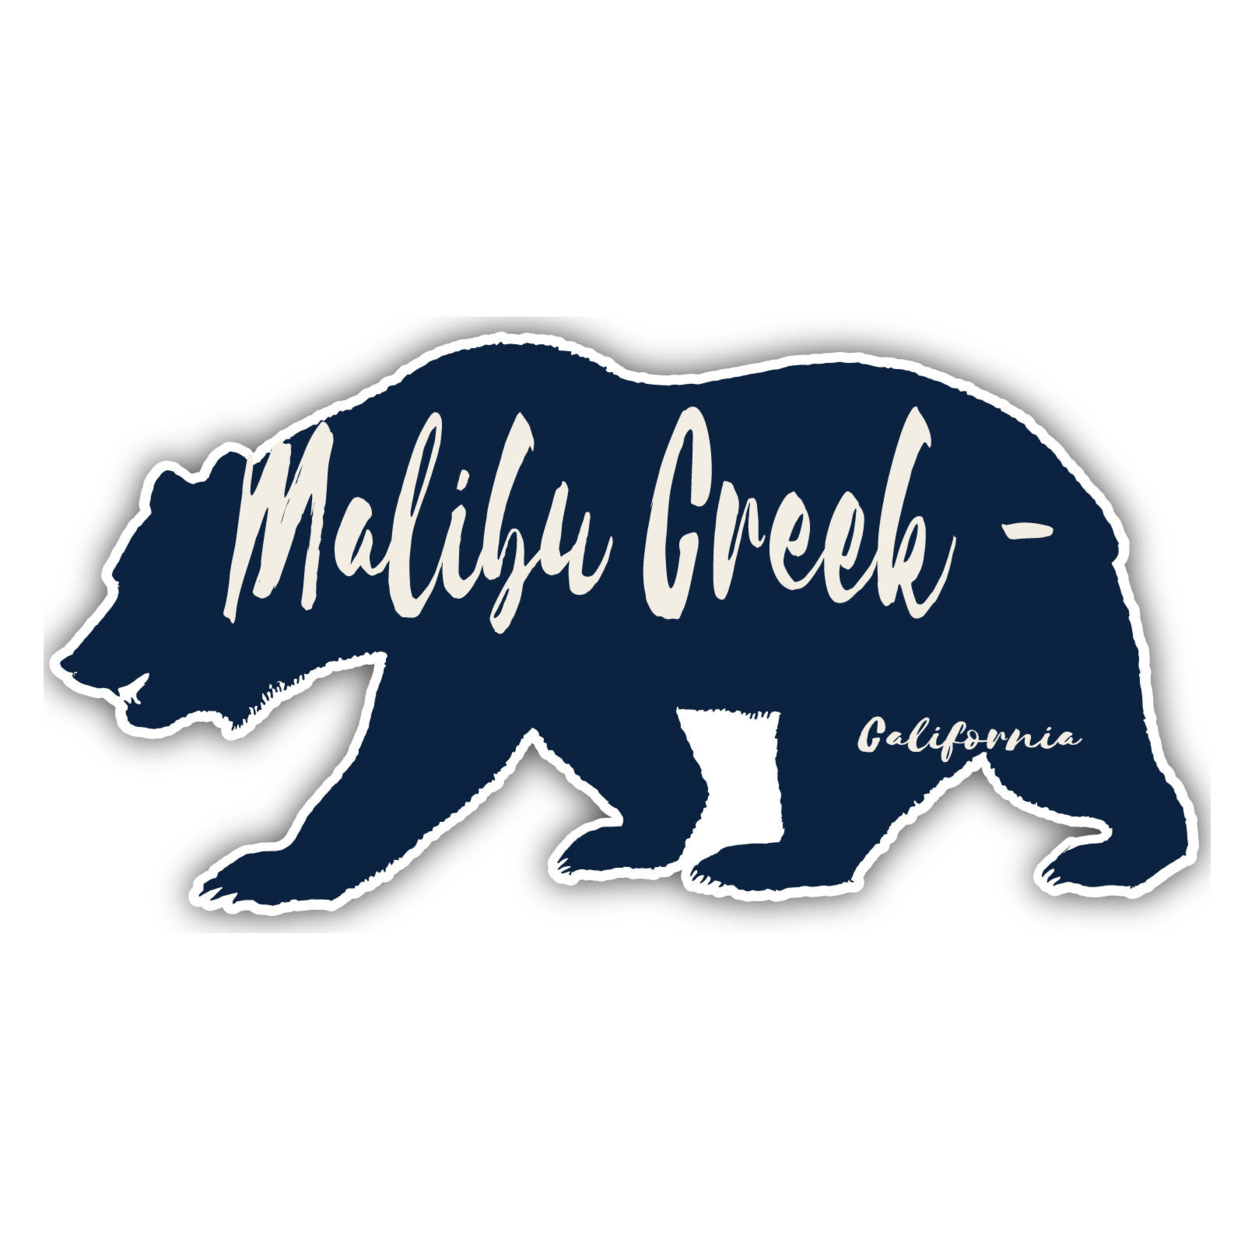 Malibu Creek - California Souvenir Decorative Stickers (Choose Theme And Size) - 4-Inch, Bear